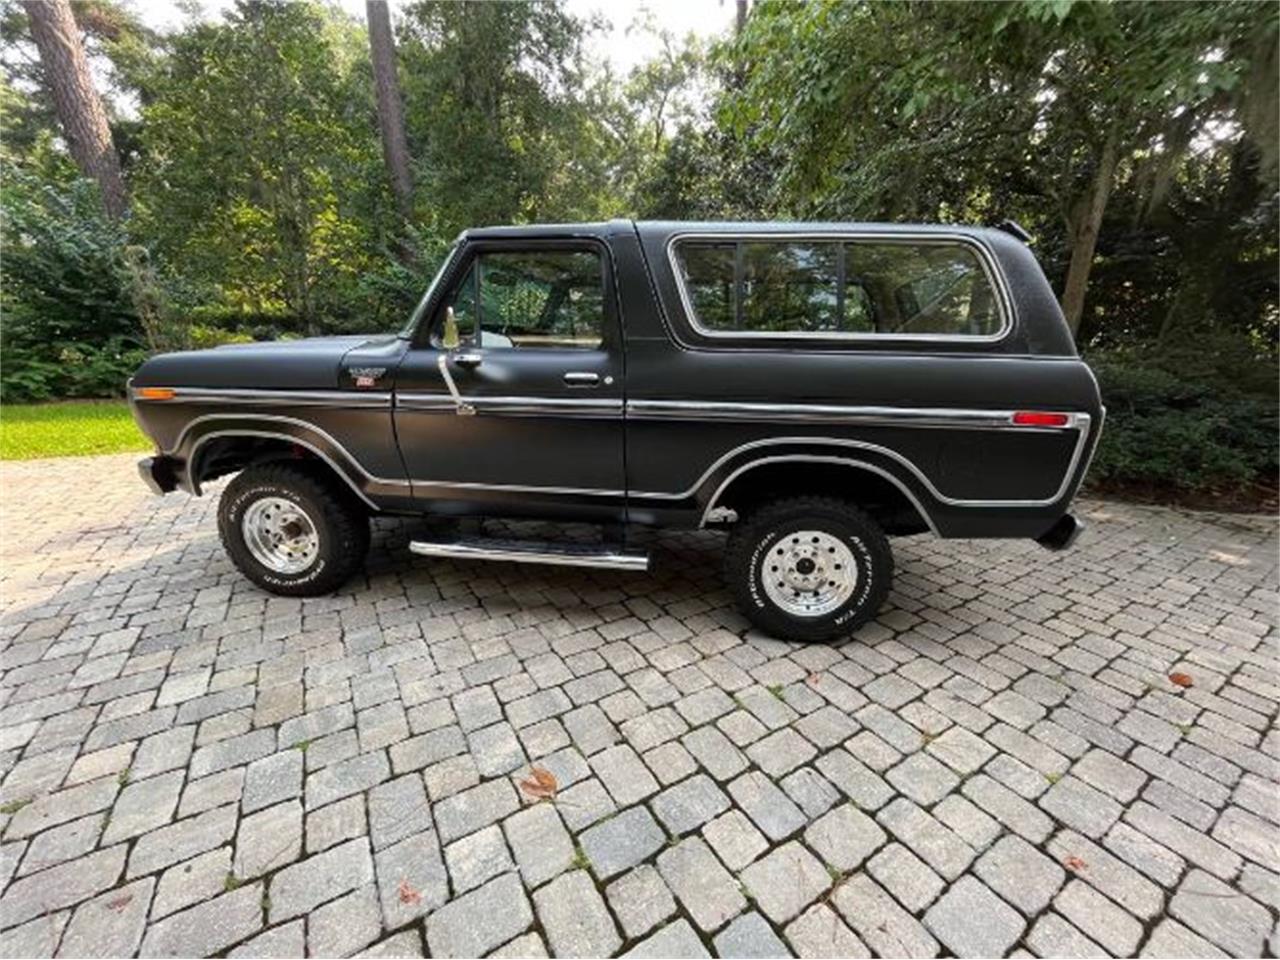 For Sale: 1978 Ford Bronco in Cadillac, Michigan for sale in Cadillac, MI